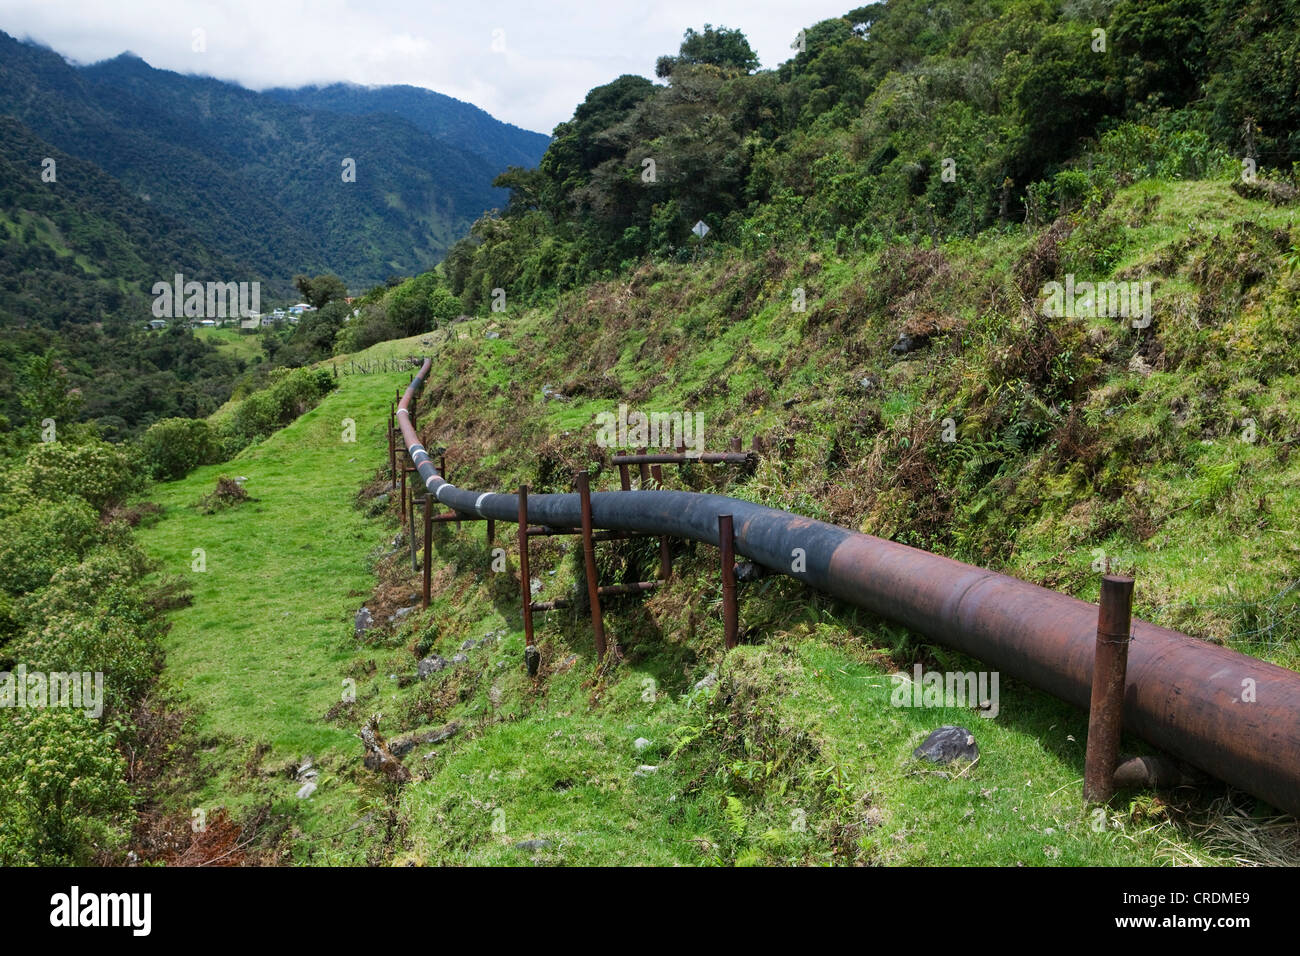 Trans-Ecuadorian oil pipeline SOTE, Sistema de Oleoducto Transecuatoriano, operated by the national oil company Petroecuador, Stock Photo